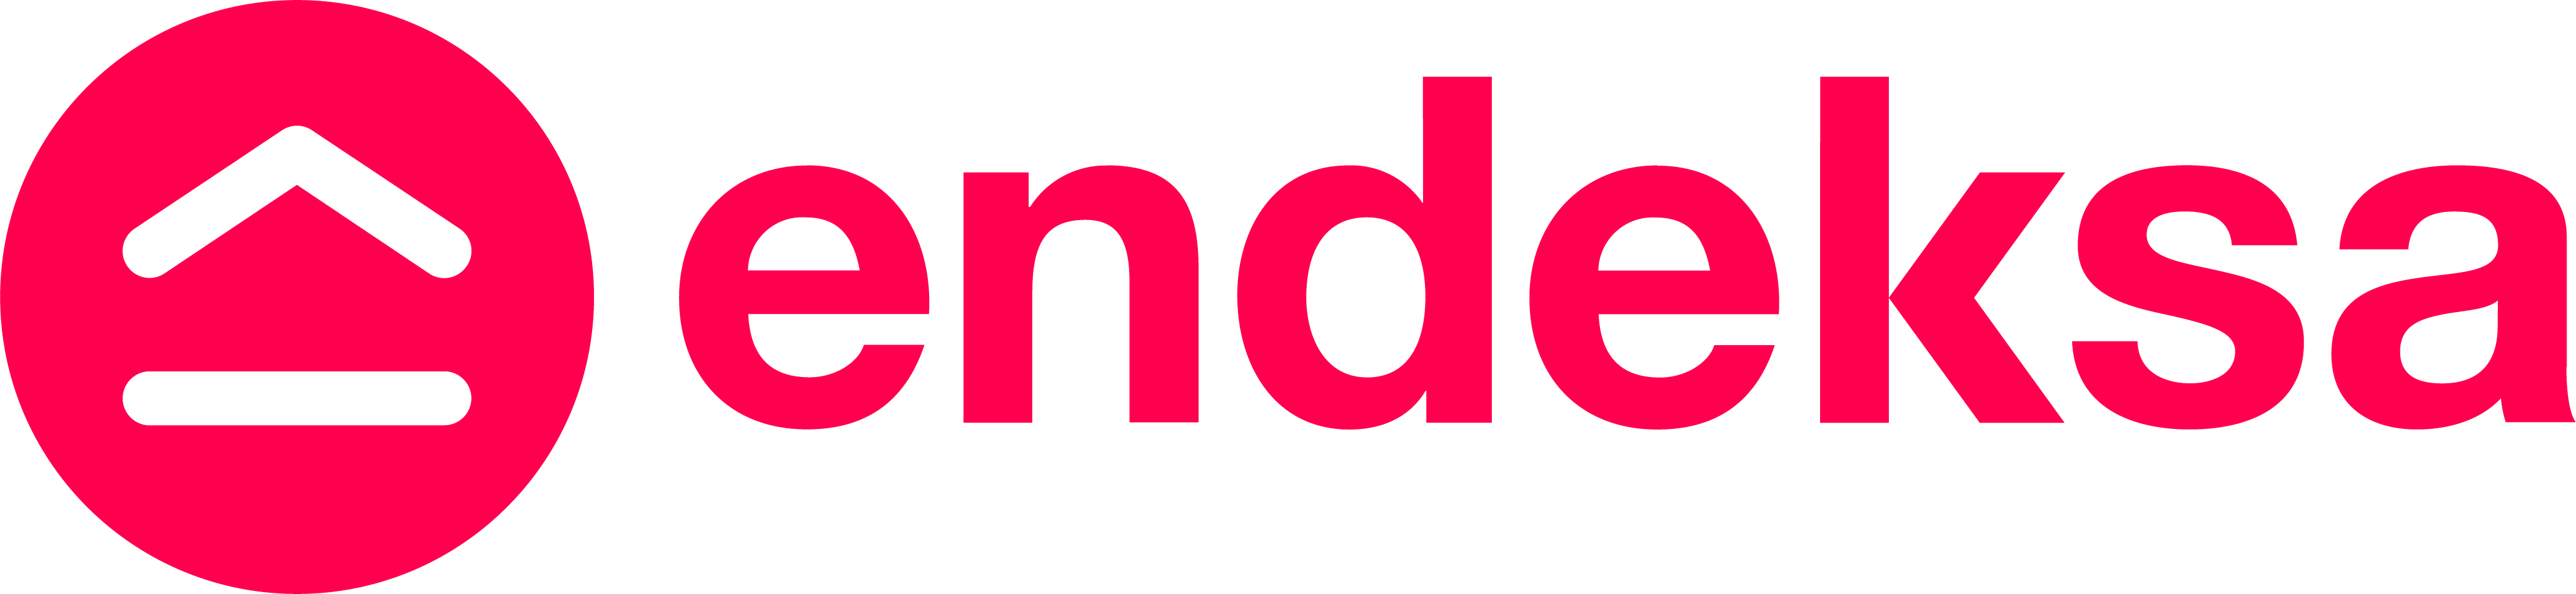 /static/img/features/endeksa-logo-red.png